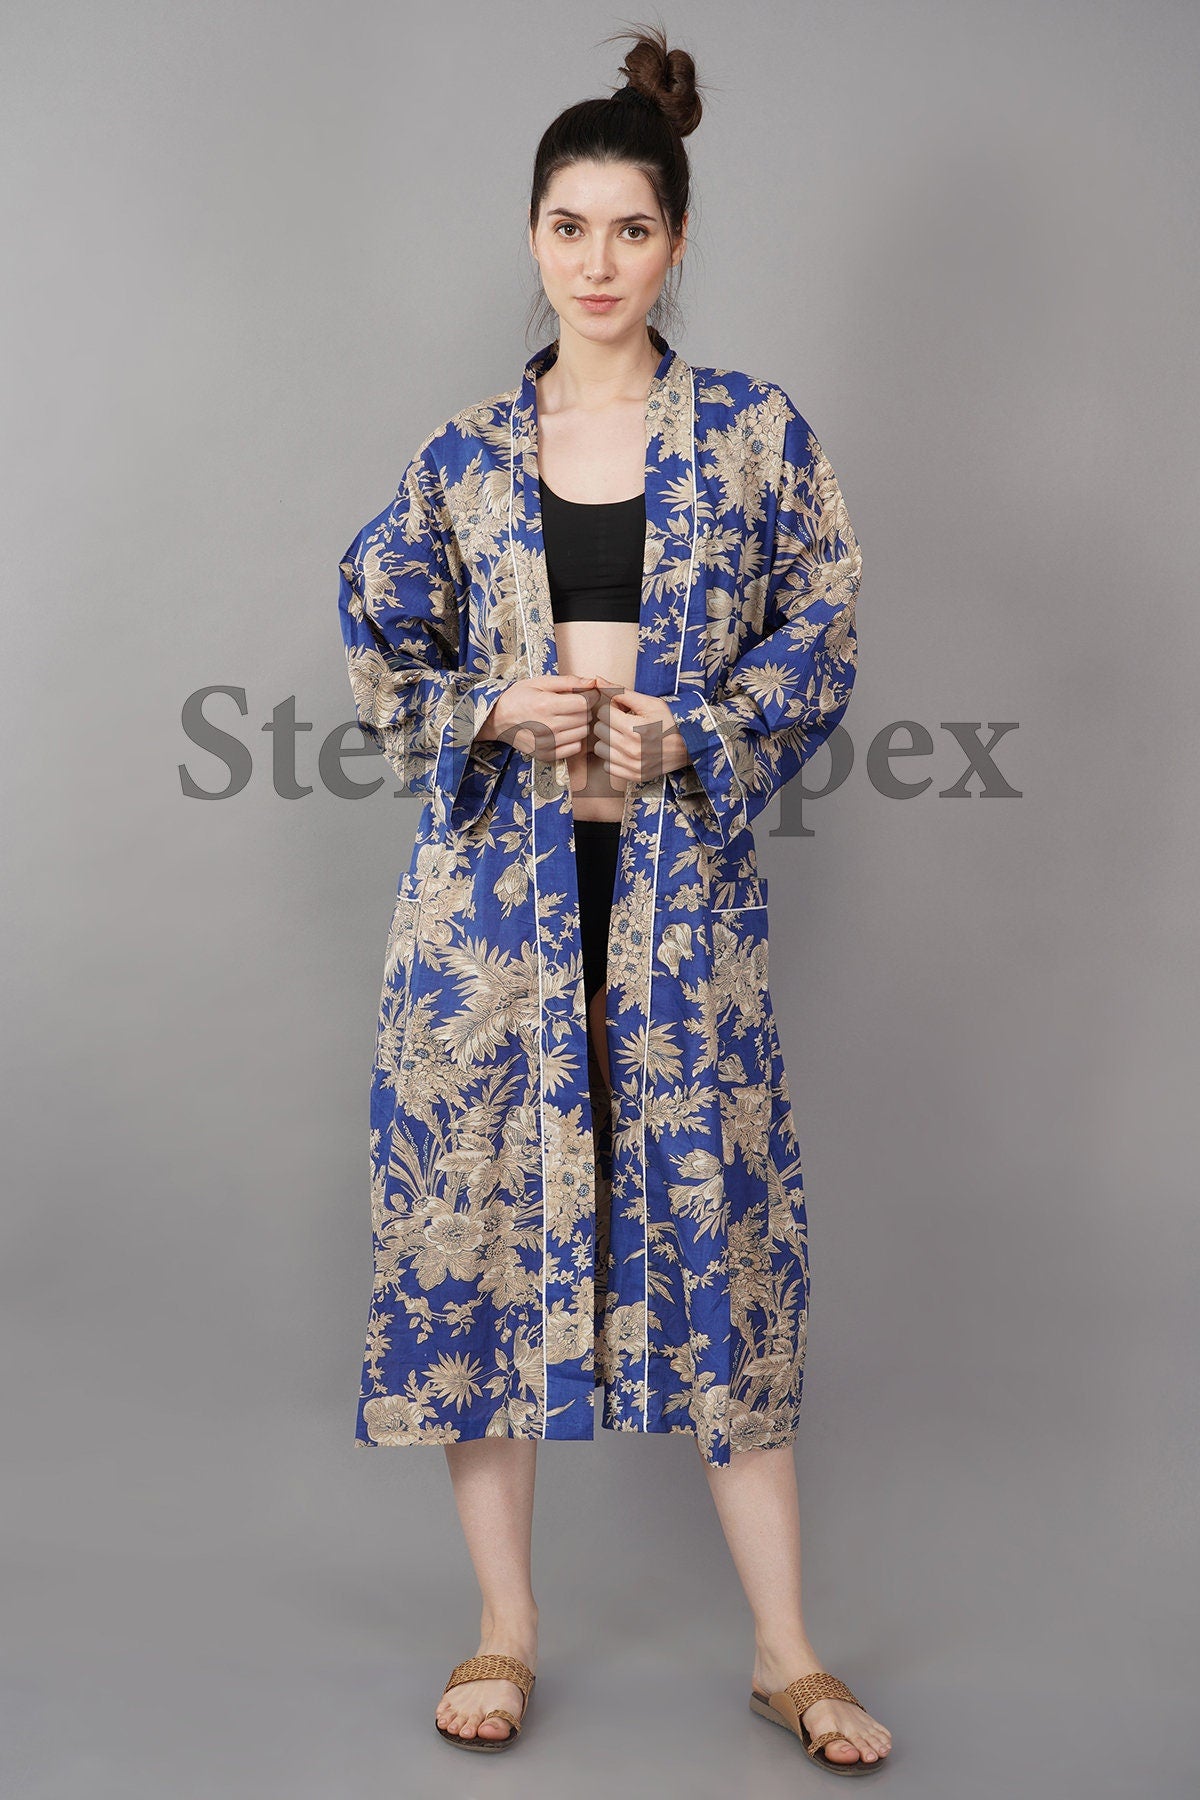 Trendy Cotton Kimono Elegant Blue Floral Bathrobe Resort Wear Beach Bikini Cover-ups Boho Kimono Bathrobe, Gift for Her